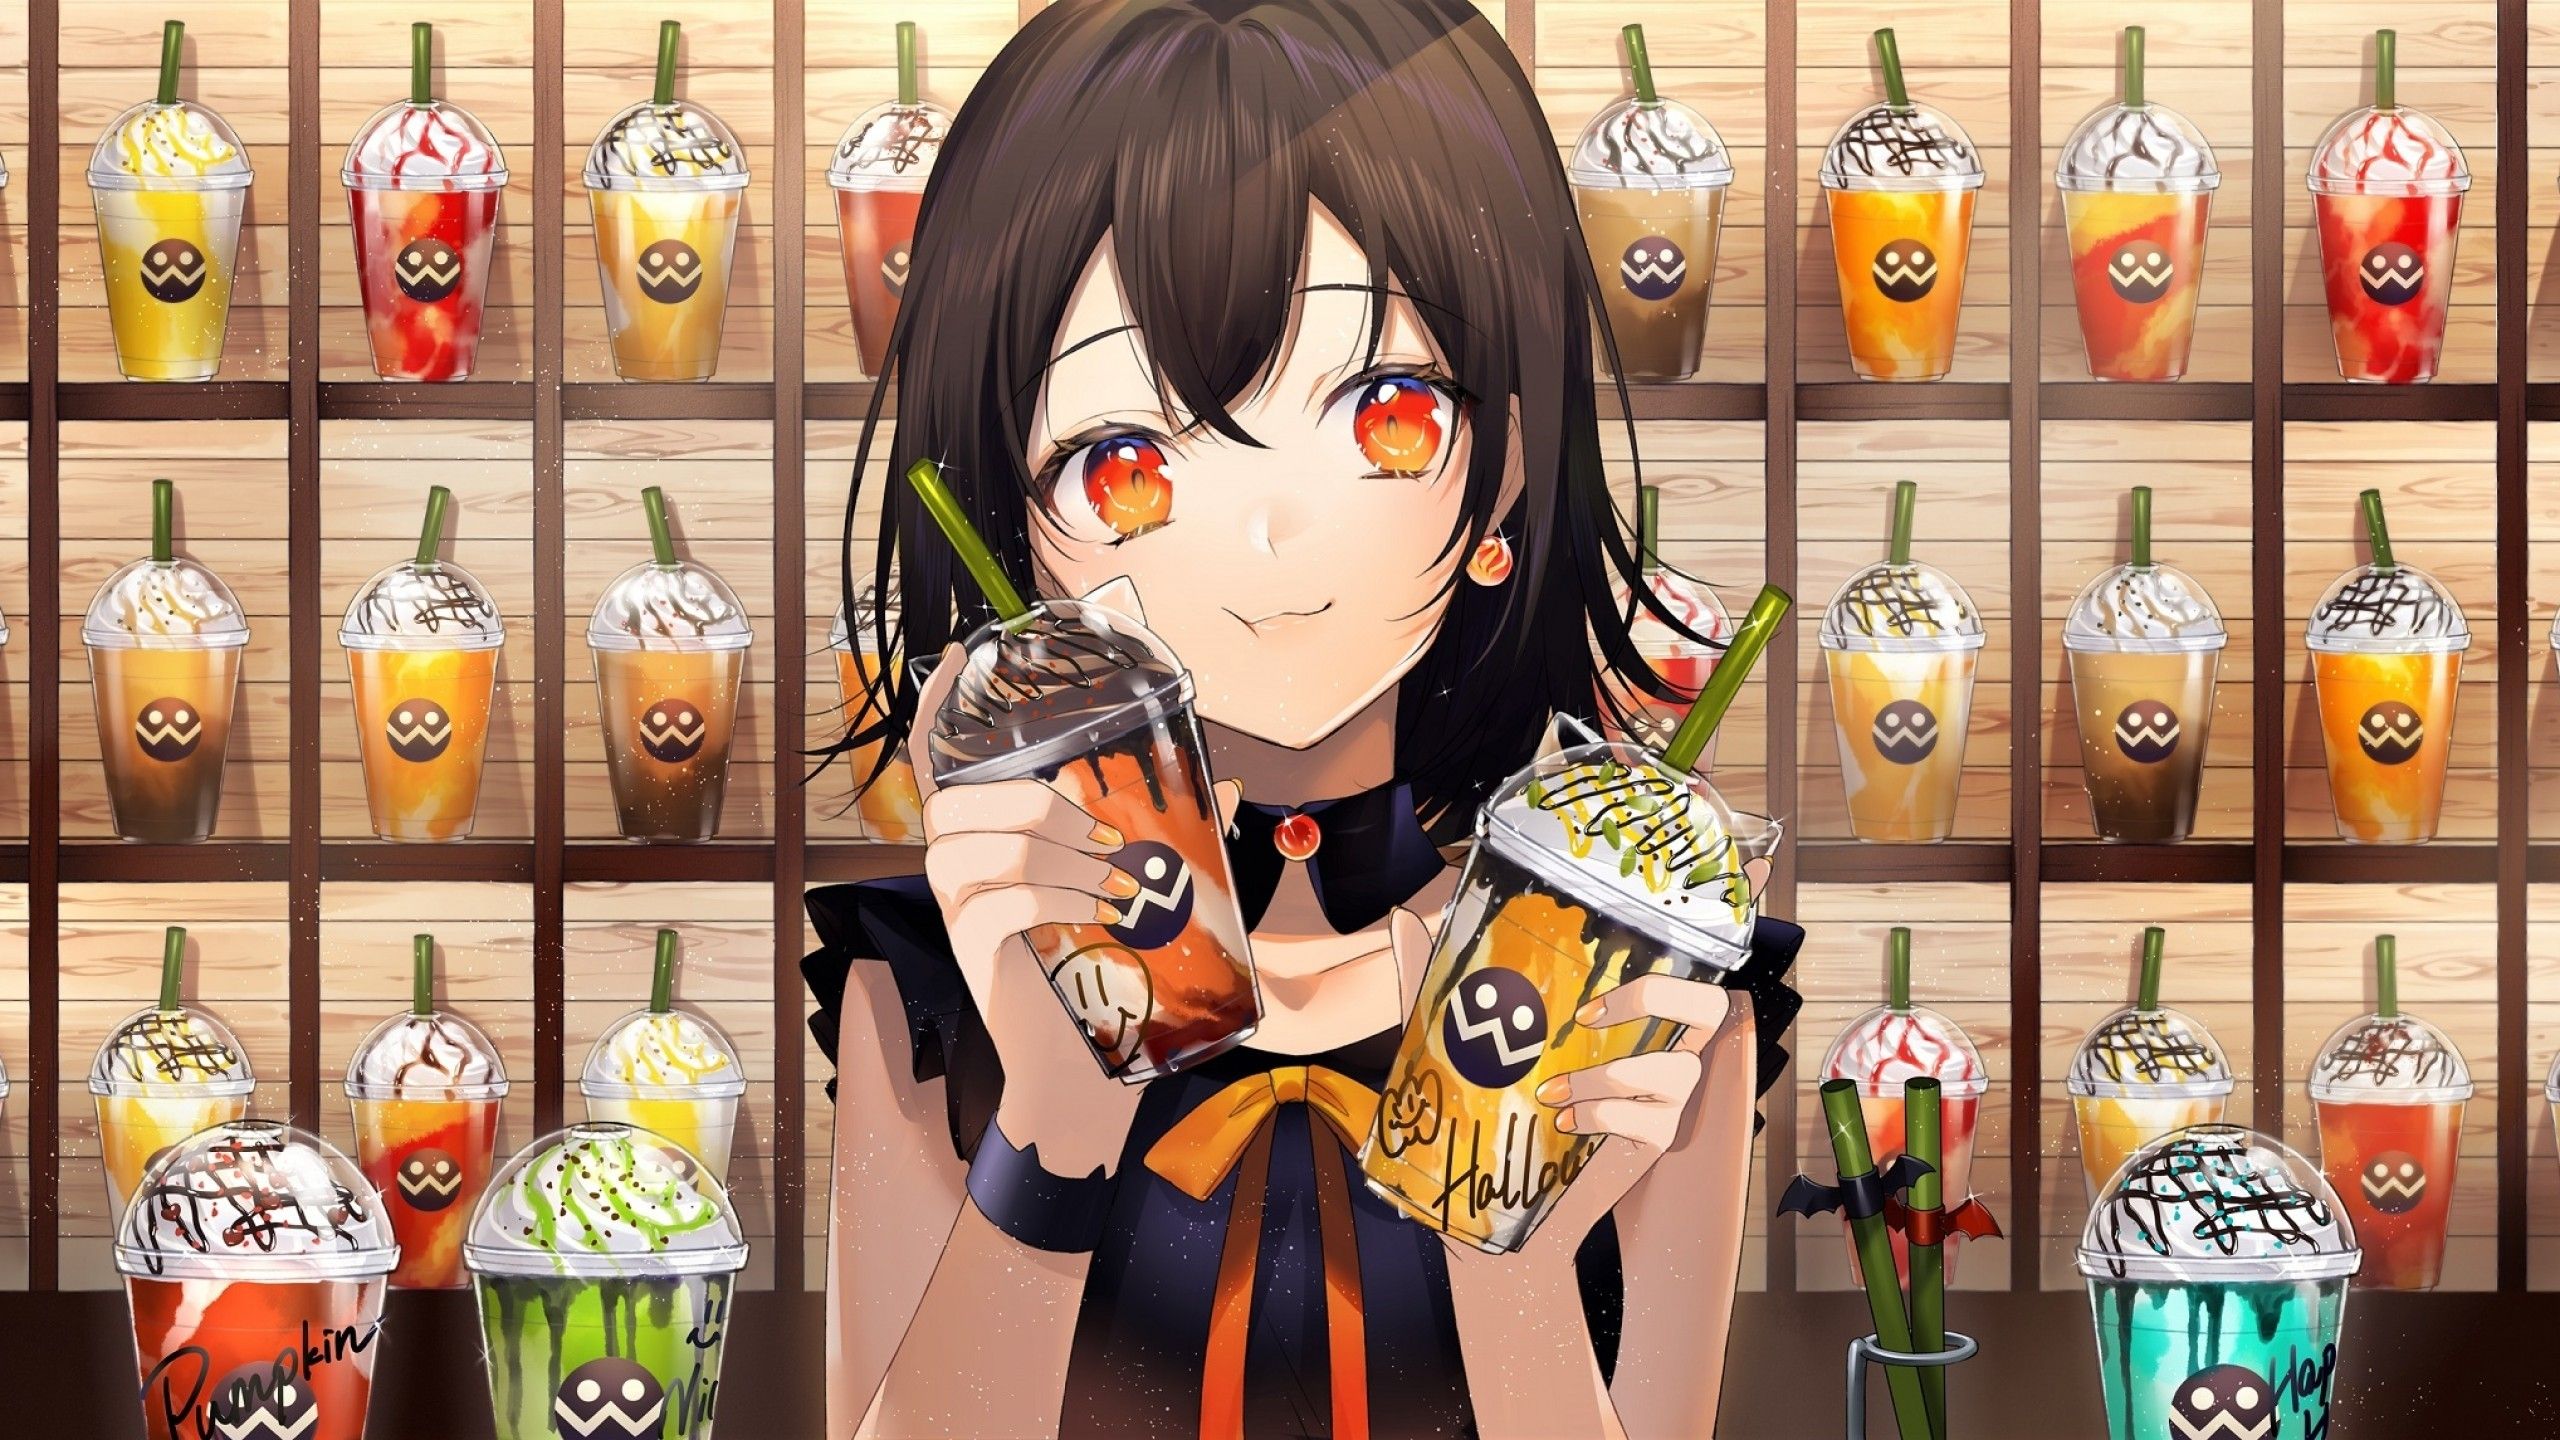 Download 2560x1440 Anime Girl, Waitress, Coffee Shop, Cute, Orange Eyes, Sweet Drinks Wallpaper for iMac 27 inch